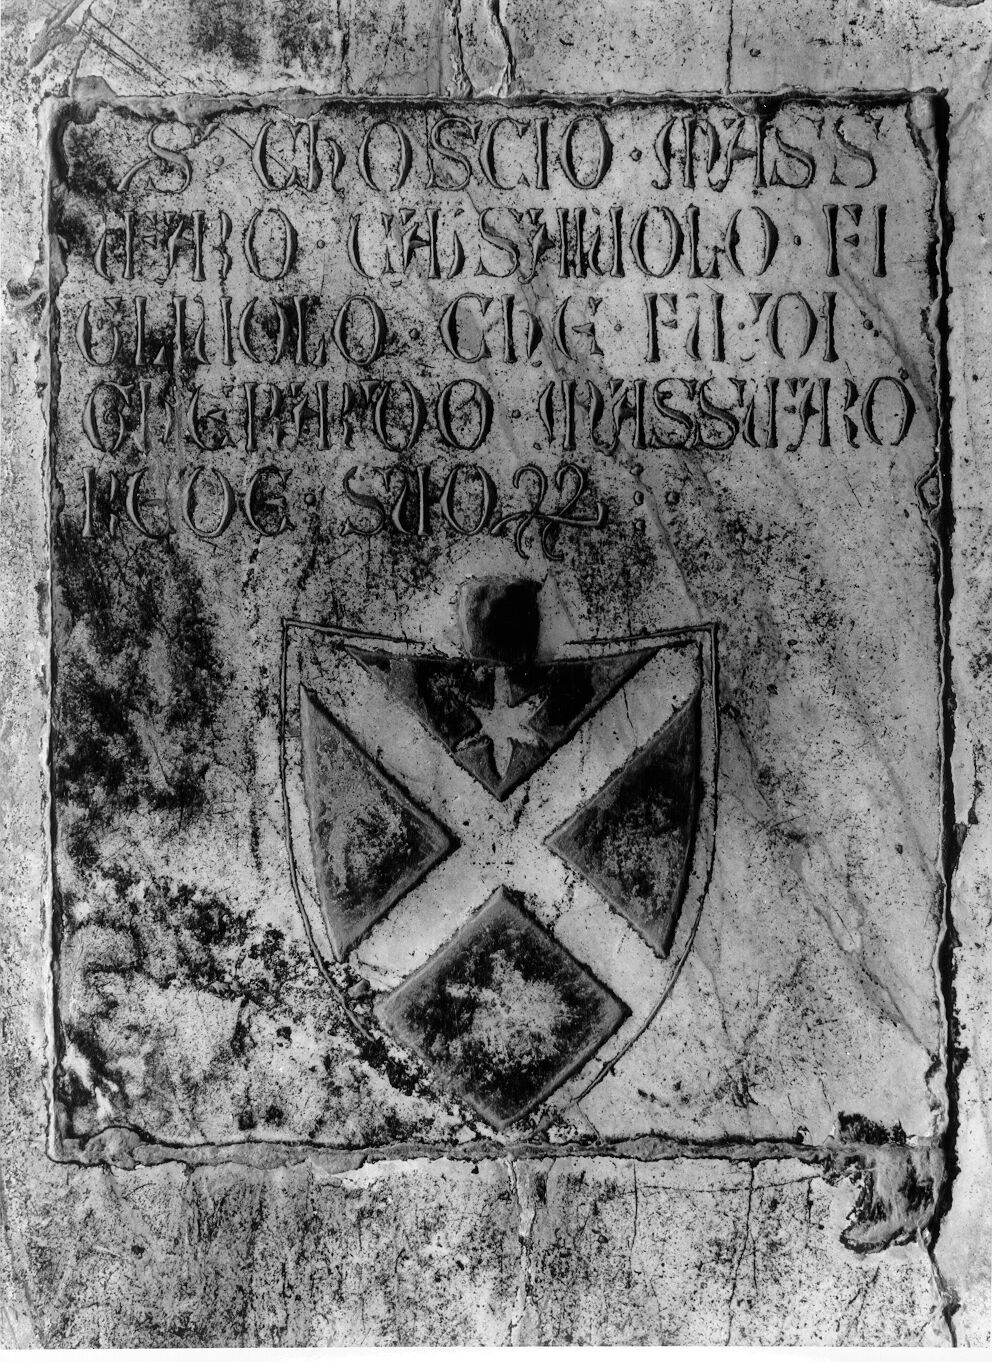 Coscio Massufaro, calzaiolo (lastra tombale) - bottega pisana (sec. XIV)